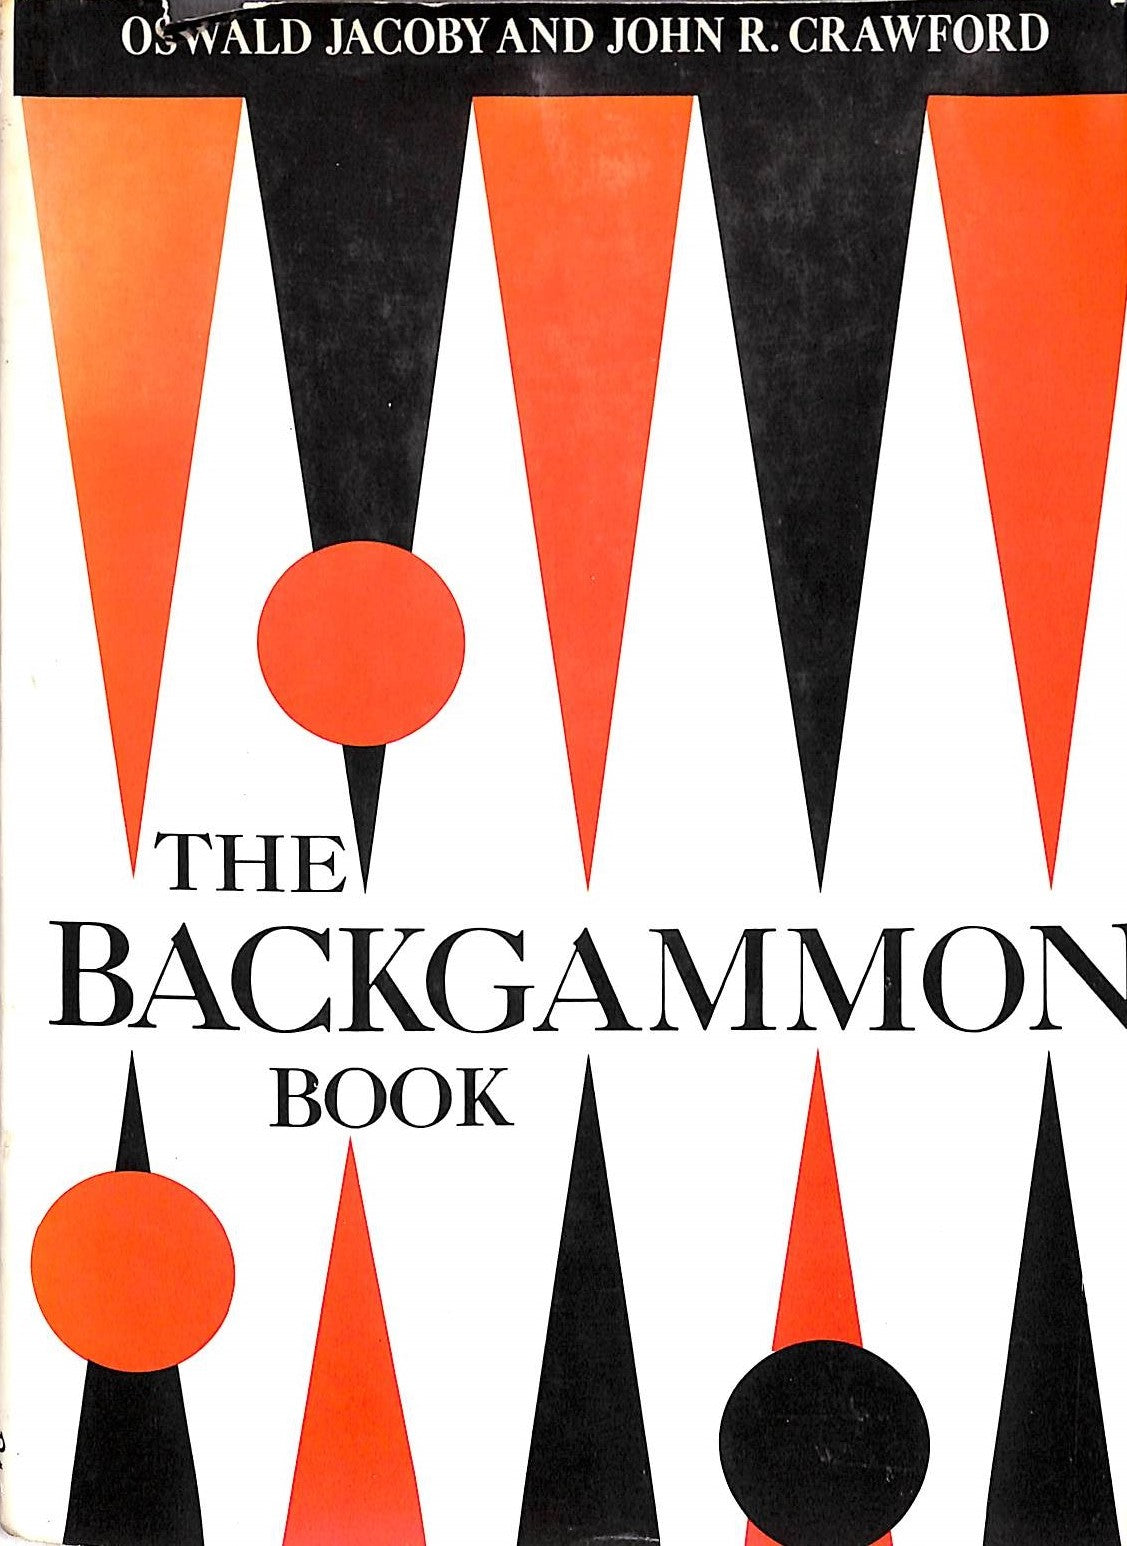 "The Backgammon Book" 1970 (SOLD)